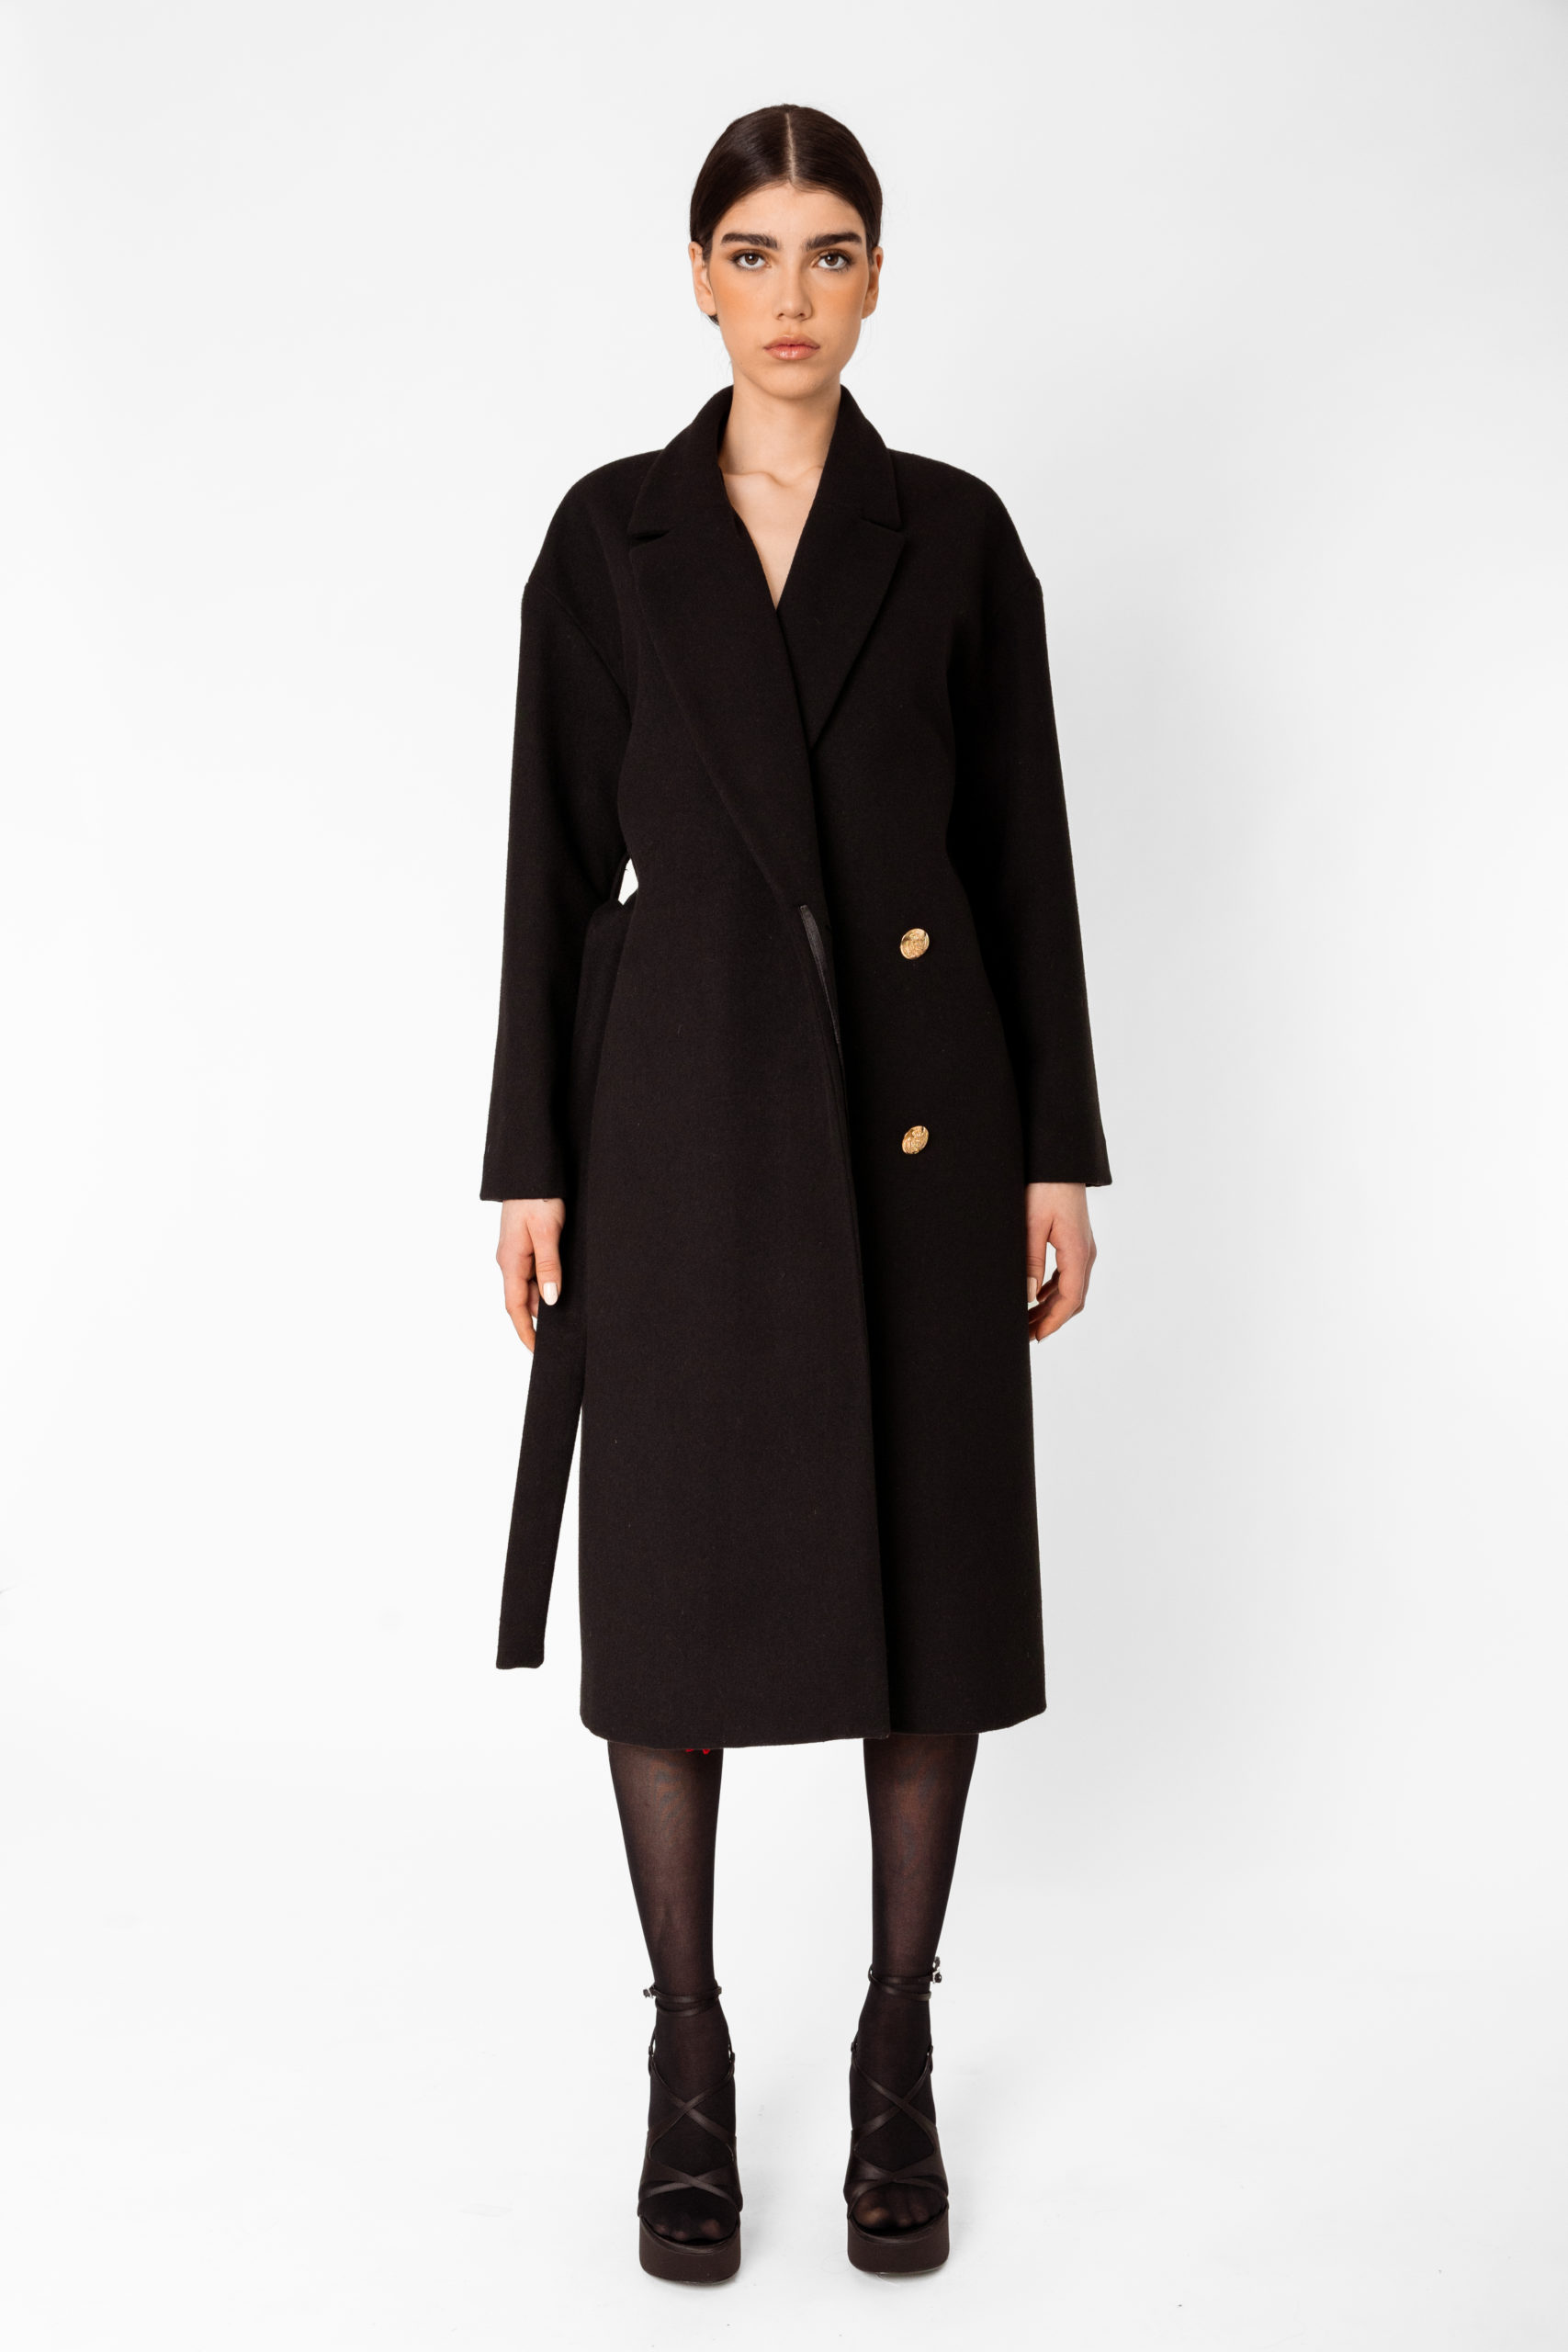 Box Black Coat | Designer Clothing Montreal - Claudette Floyd